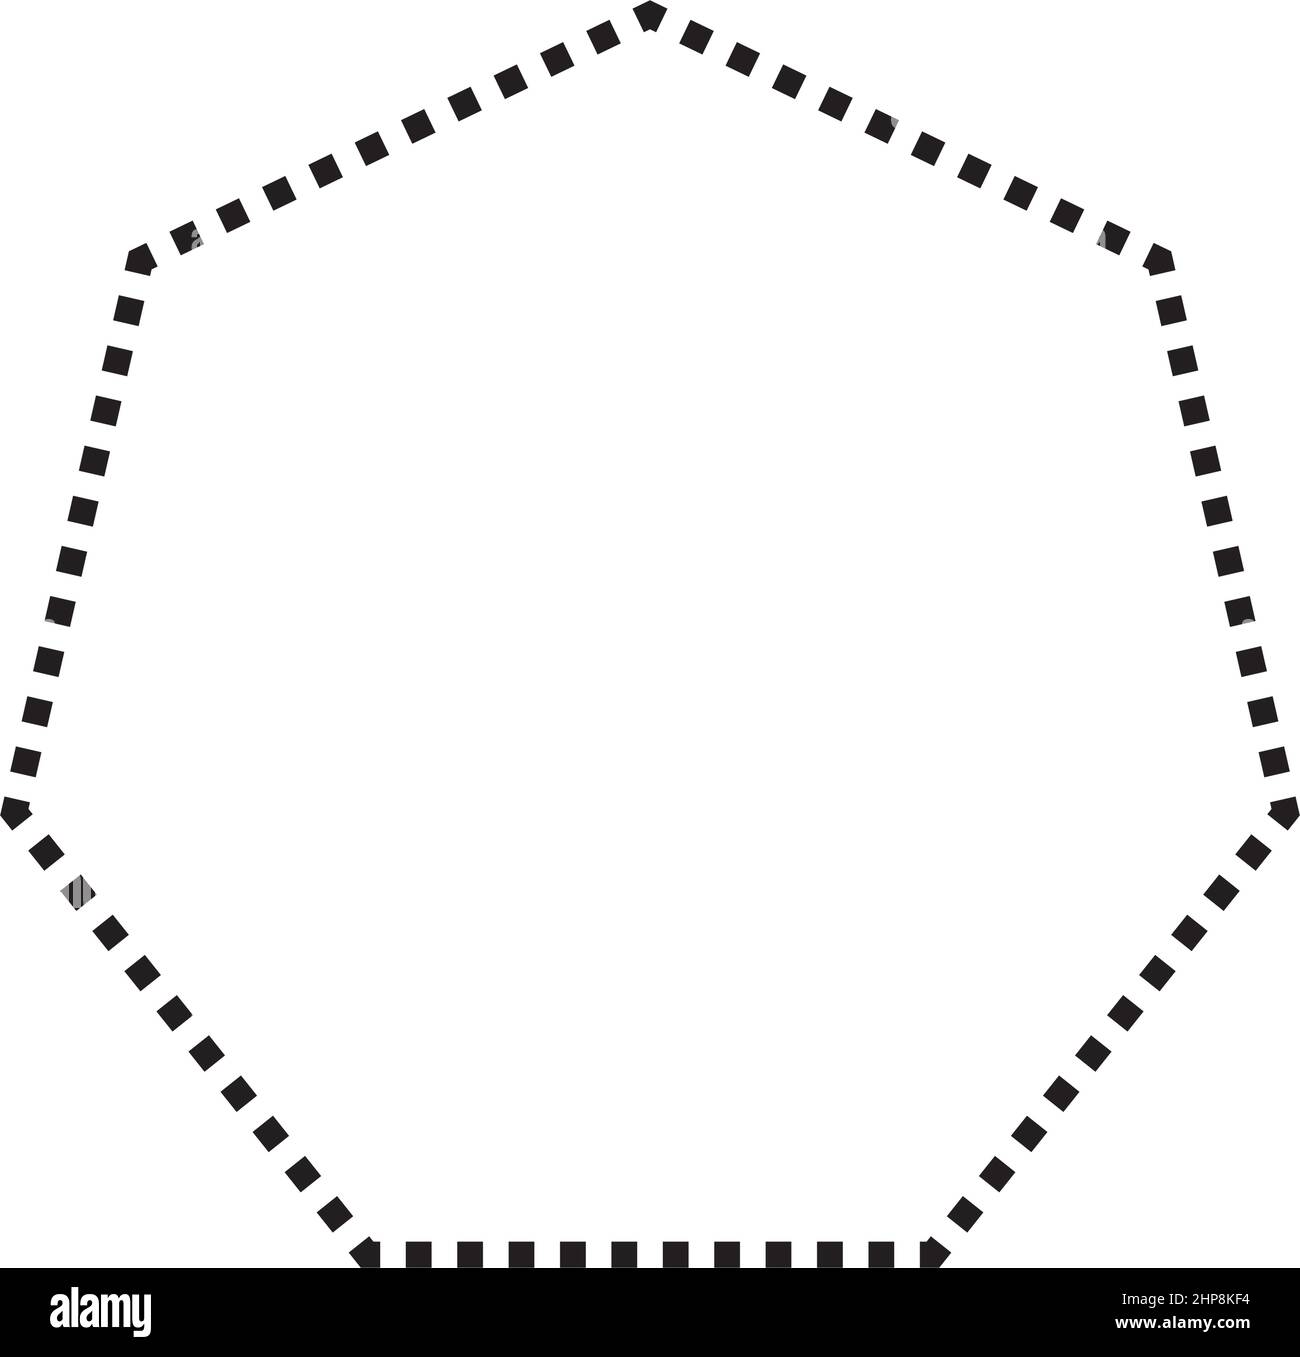 Heptagon Symbol gepunktete Form Vektor-Symbol für kreative Grafik-Design-ui-Element in einem Piktogramm Illustration Stock Vektor